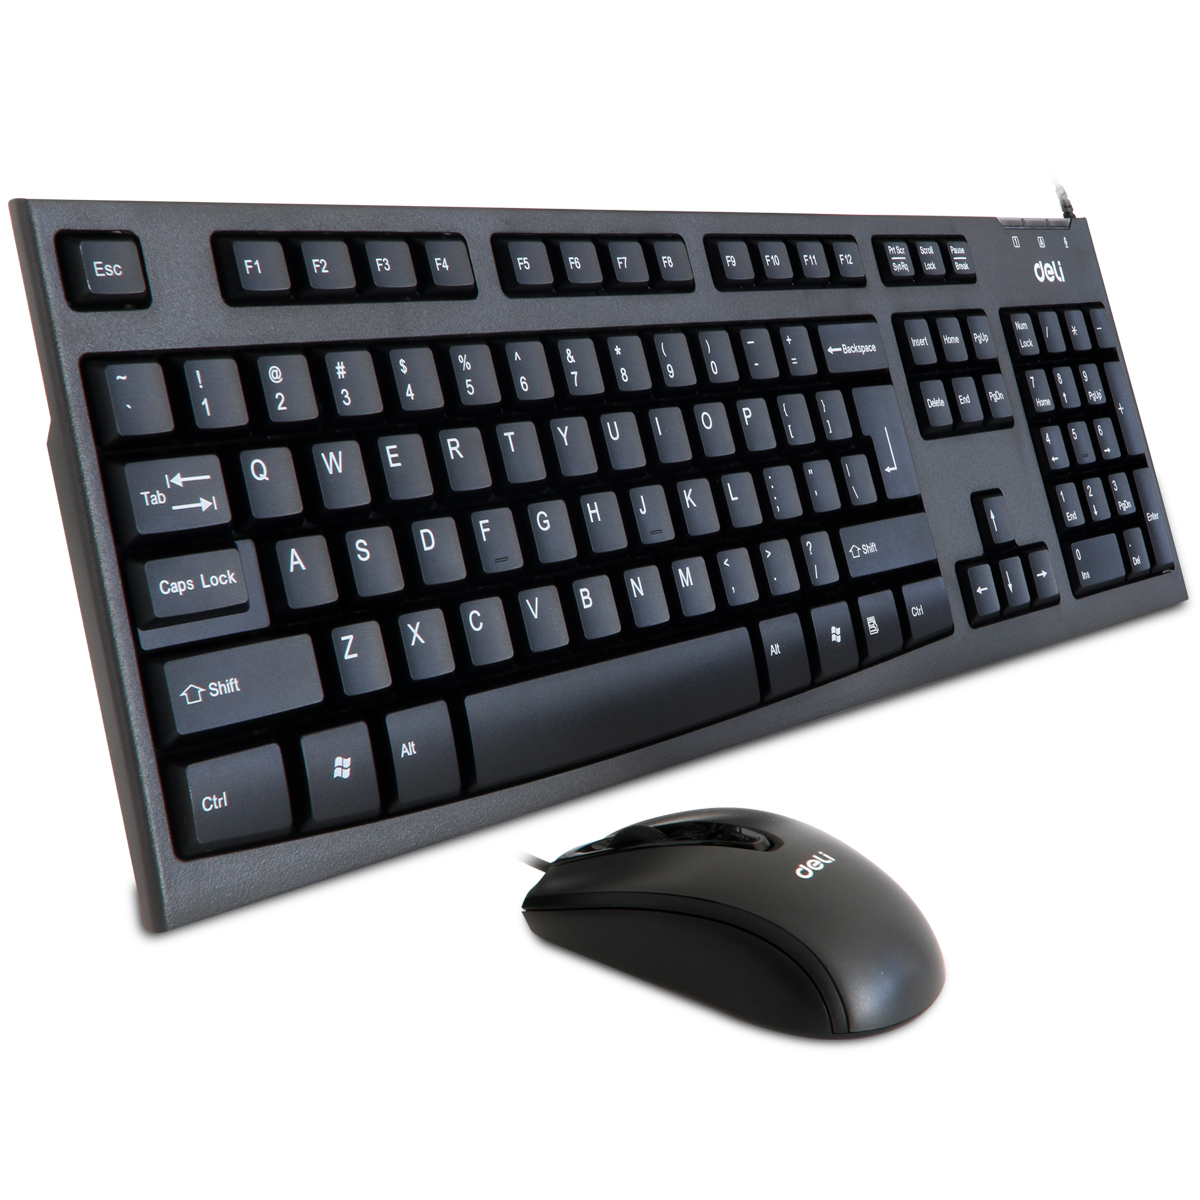 Deli-3710 Mouse & Keyboard Set